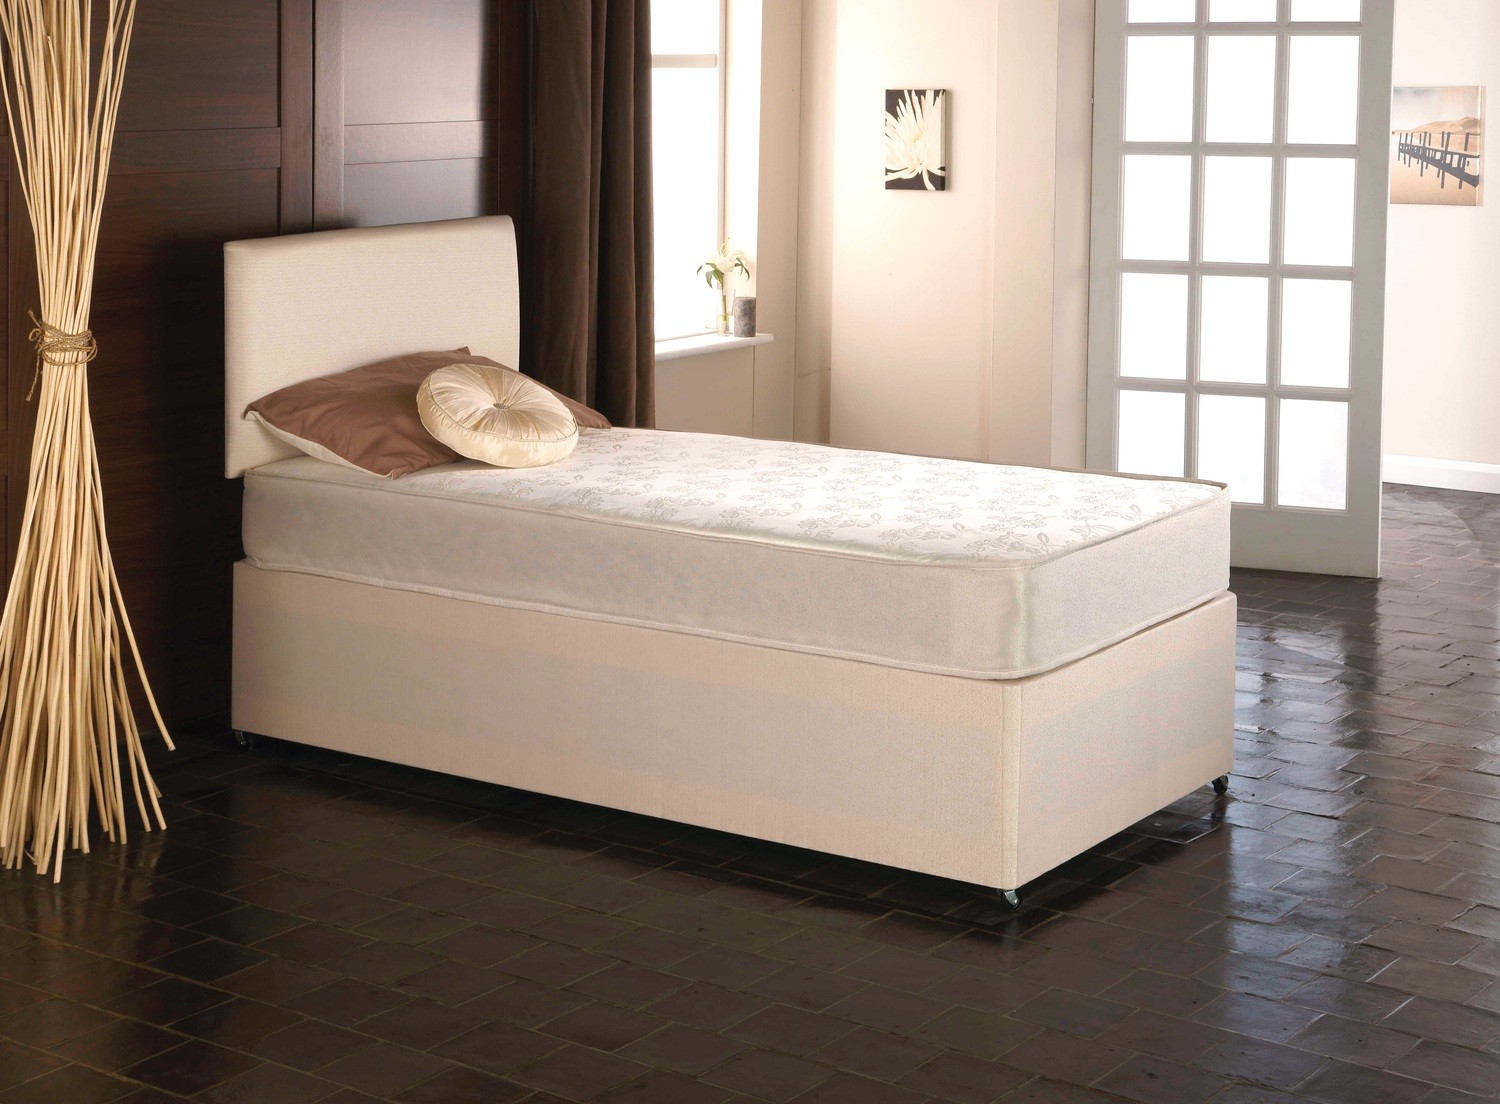 hilton bed mattress reviews